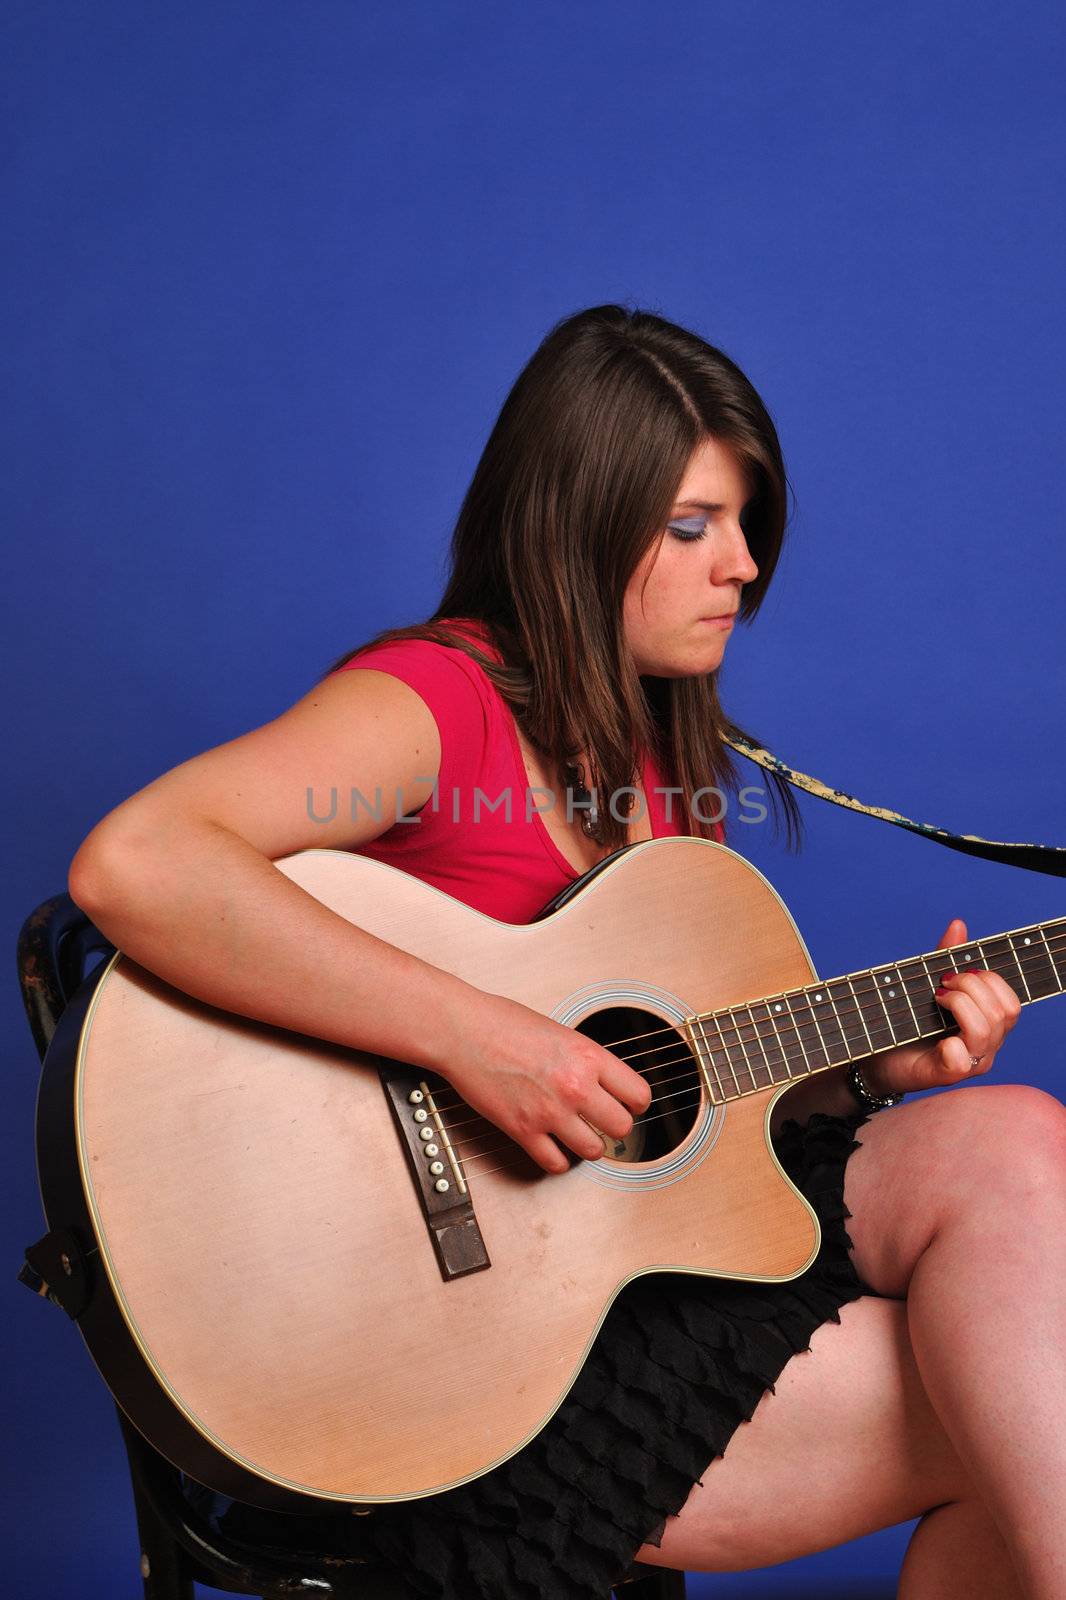 girl guitarist by pauws99